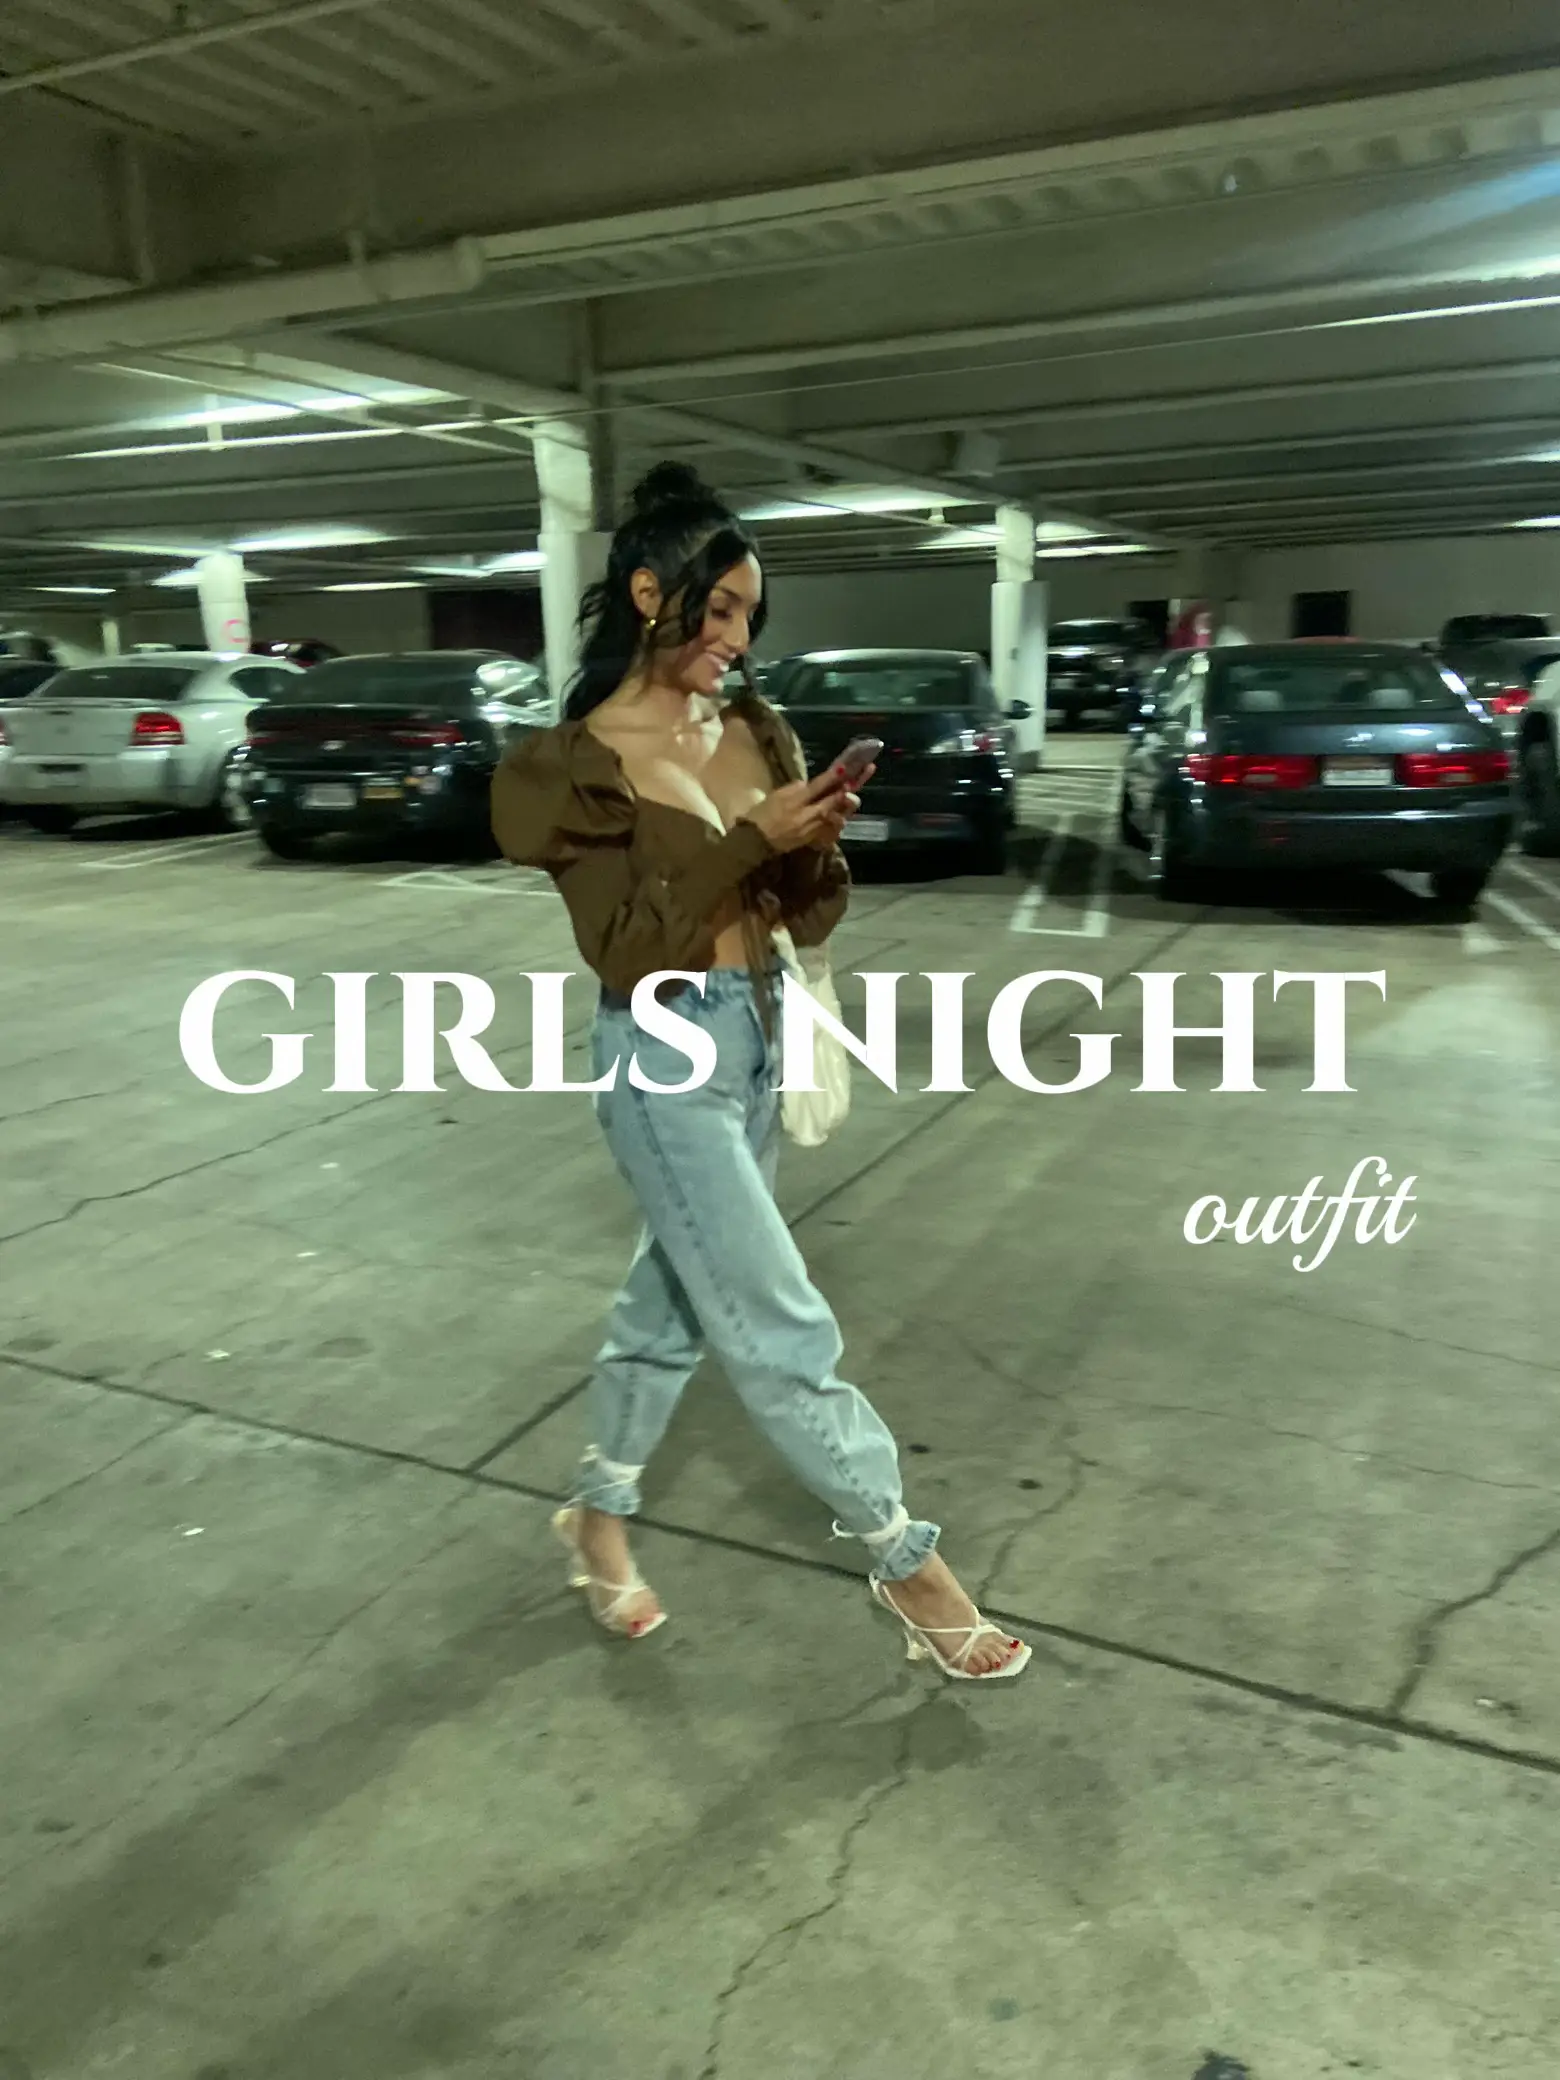 Easy girl's night outfit! 🥂 #styletips #girlsnightout